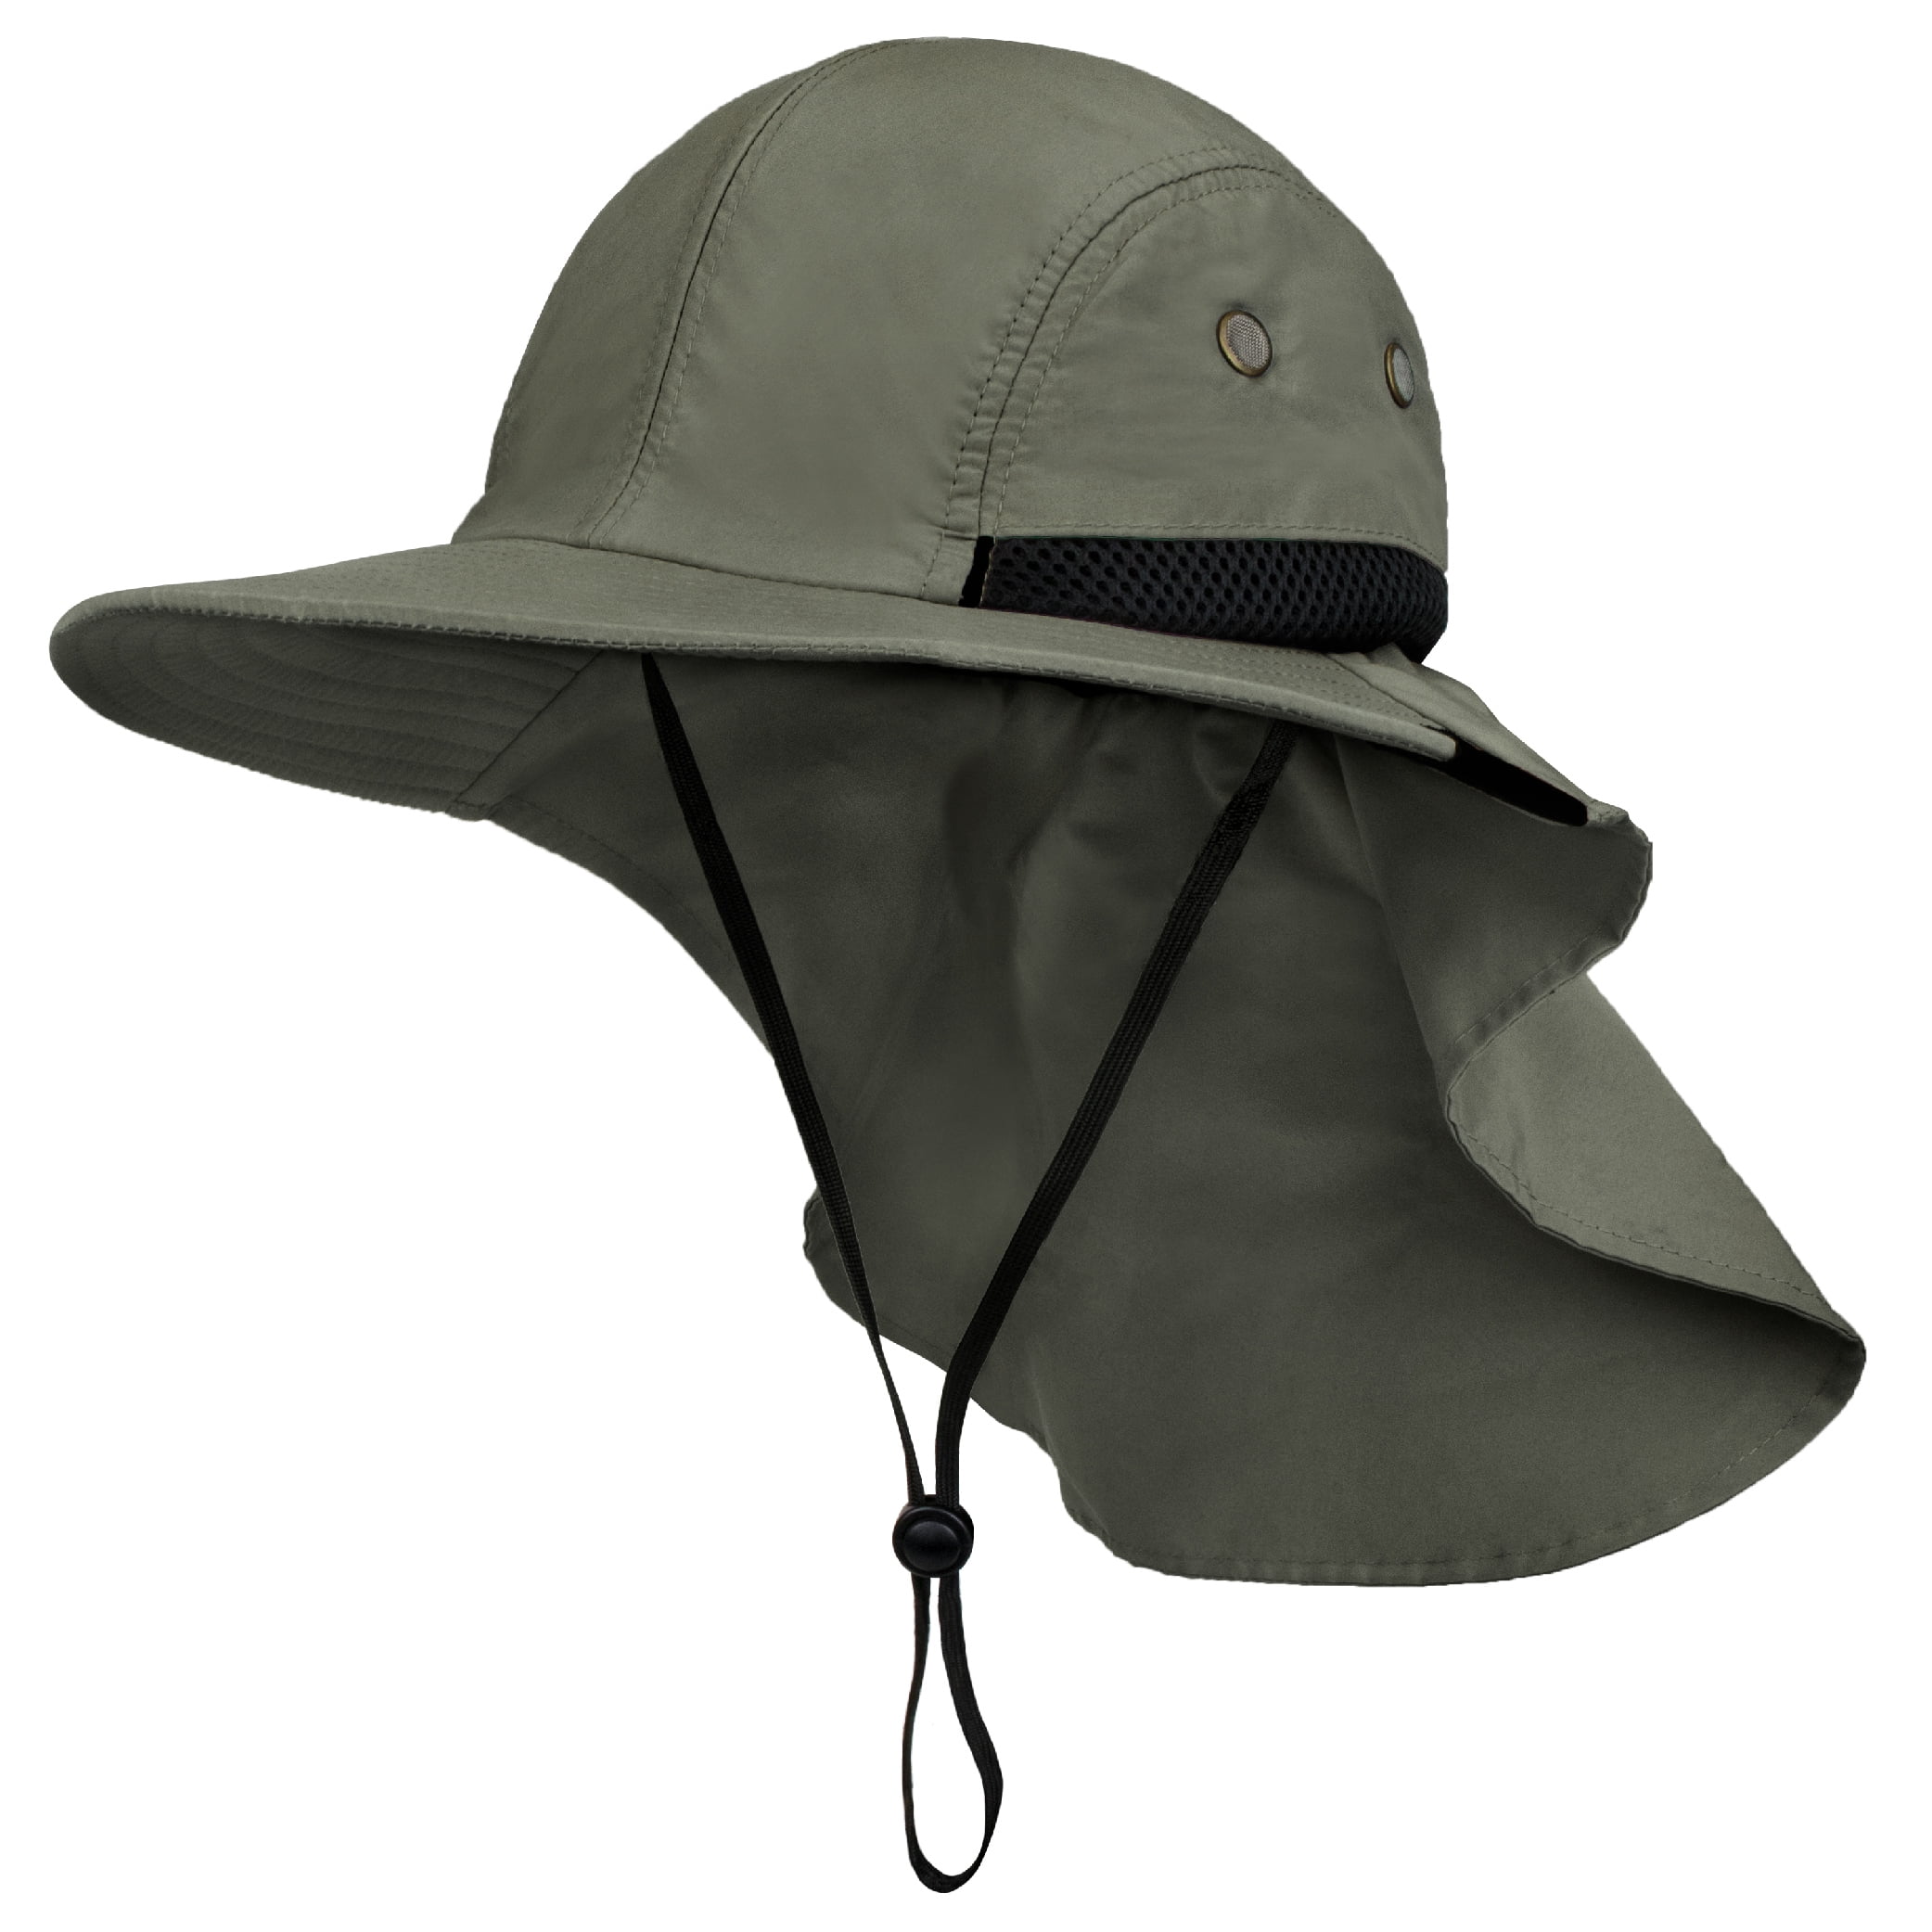 SUN CUBE Sun Hat for Men, Wide Brim Fishing Hat Neck Flap Cover Men Women,  Hiking Safari, UV Sun Protection Summer Gardening Beach Camping UPF 50+,  Olive 